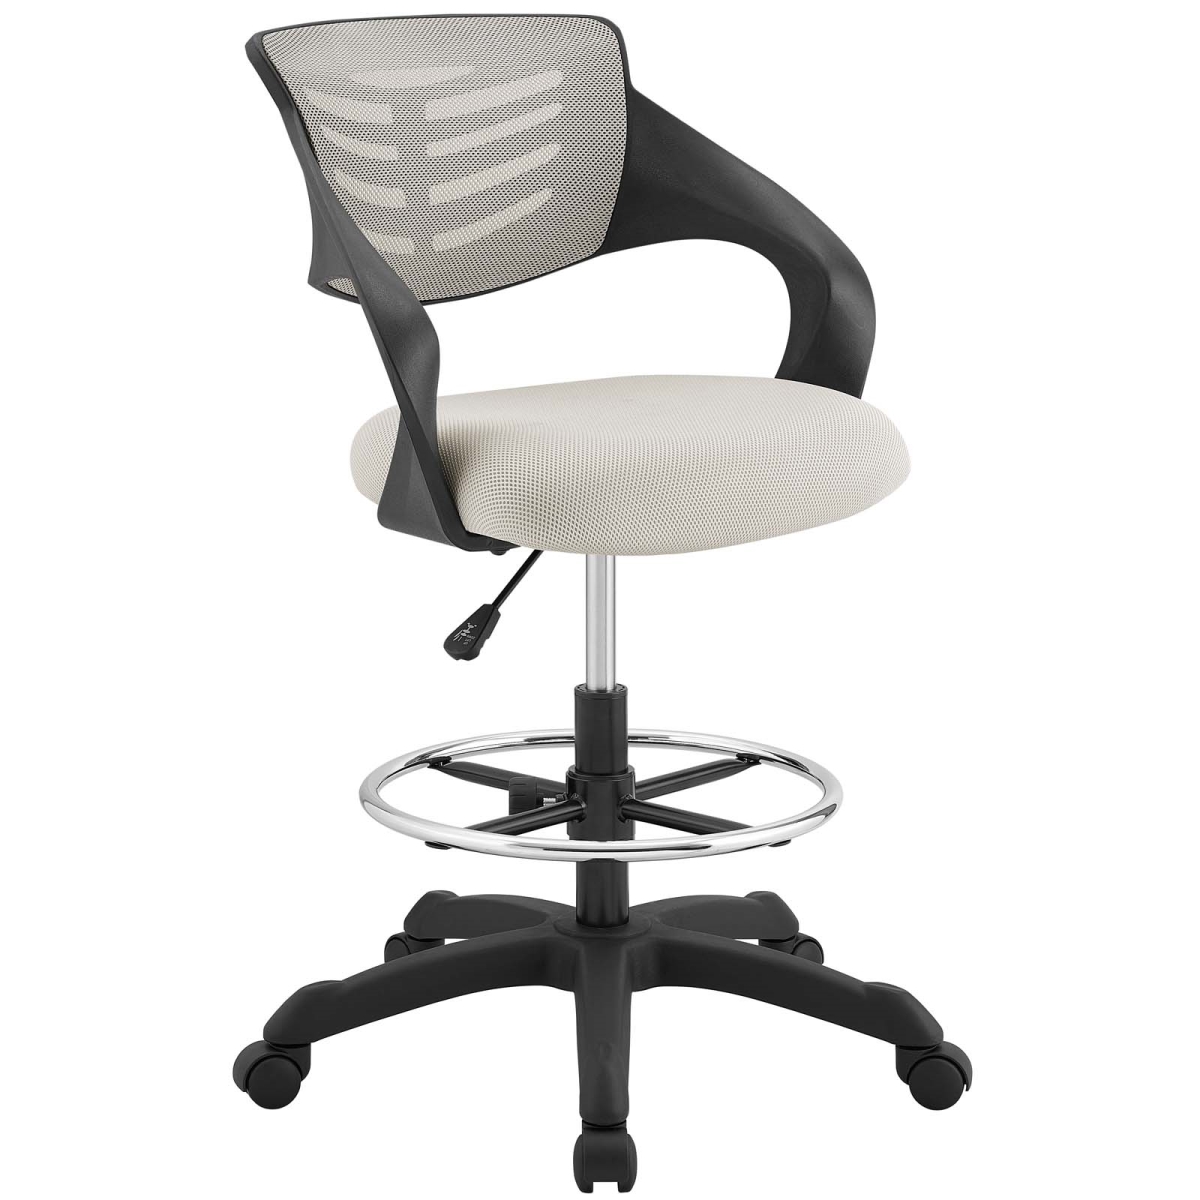 Eei-3040-gry Thrive Mesh Drafting Chair - Gray, 35 - 43 X 25 X 24.5 In.